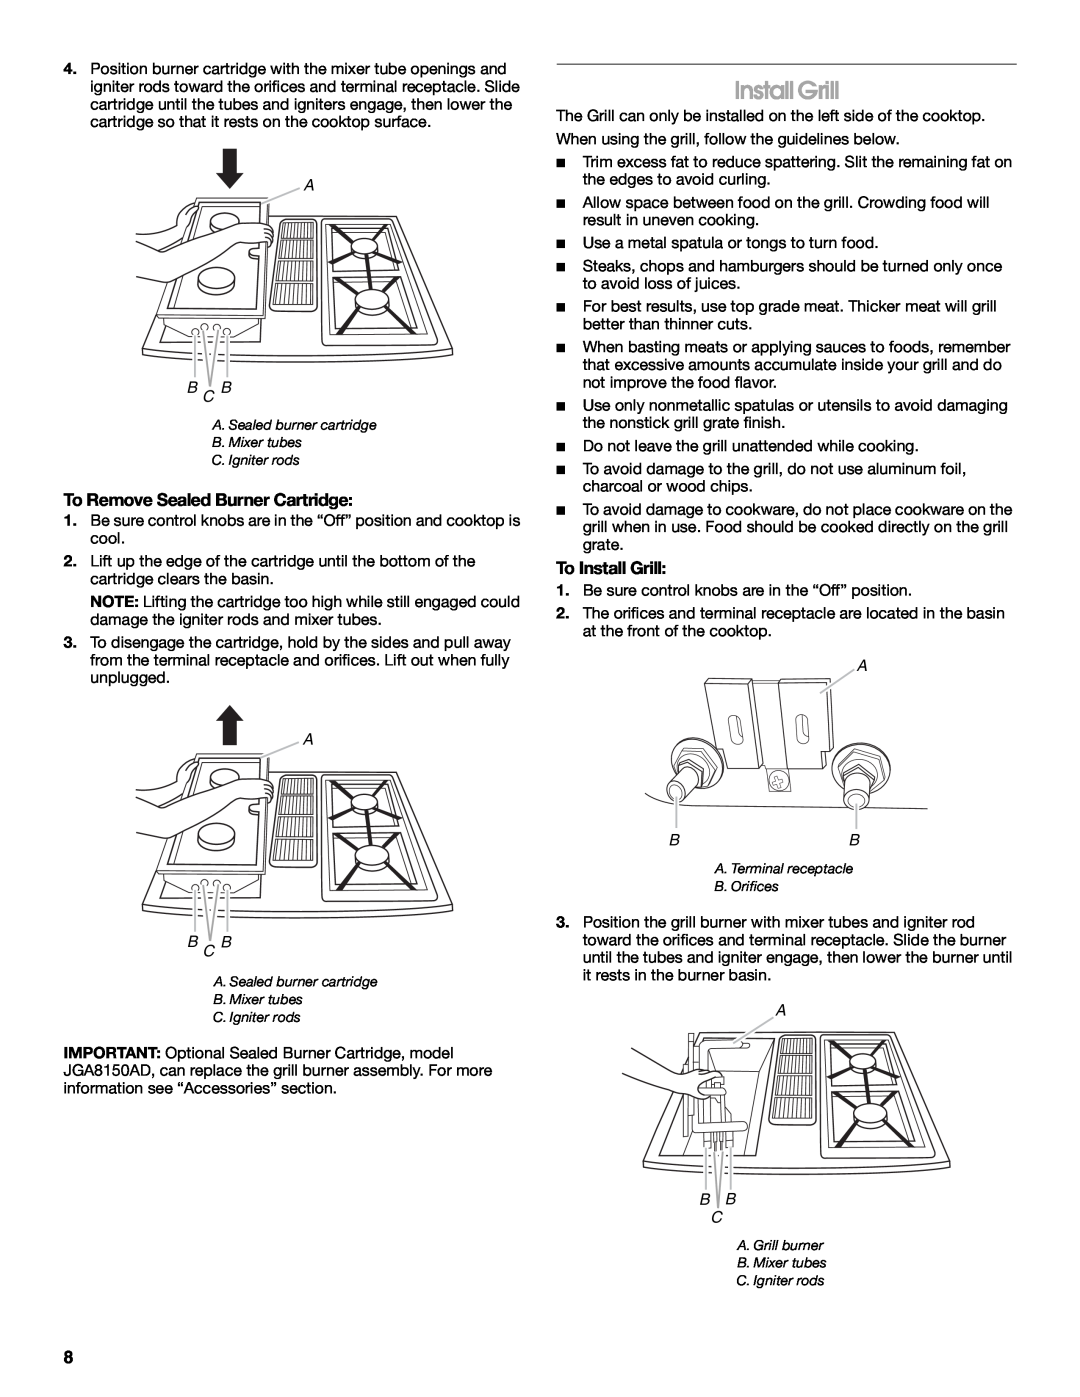 Jenn-Air JD59860 manual To Remove Sealed Burner Cartridge, To Install Grill, A B C B, B B C 